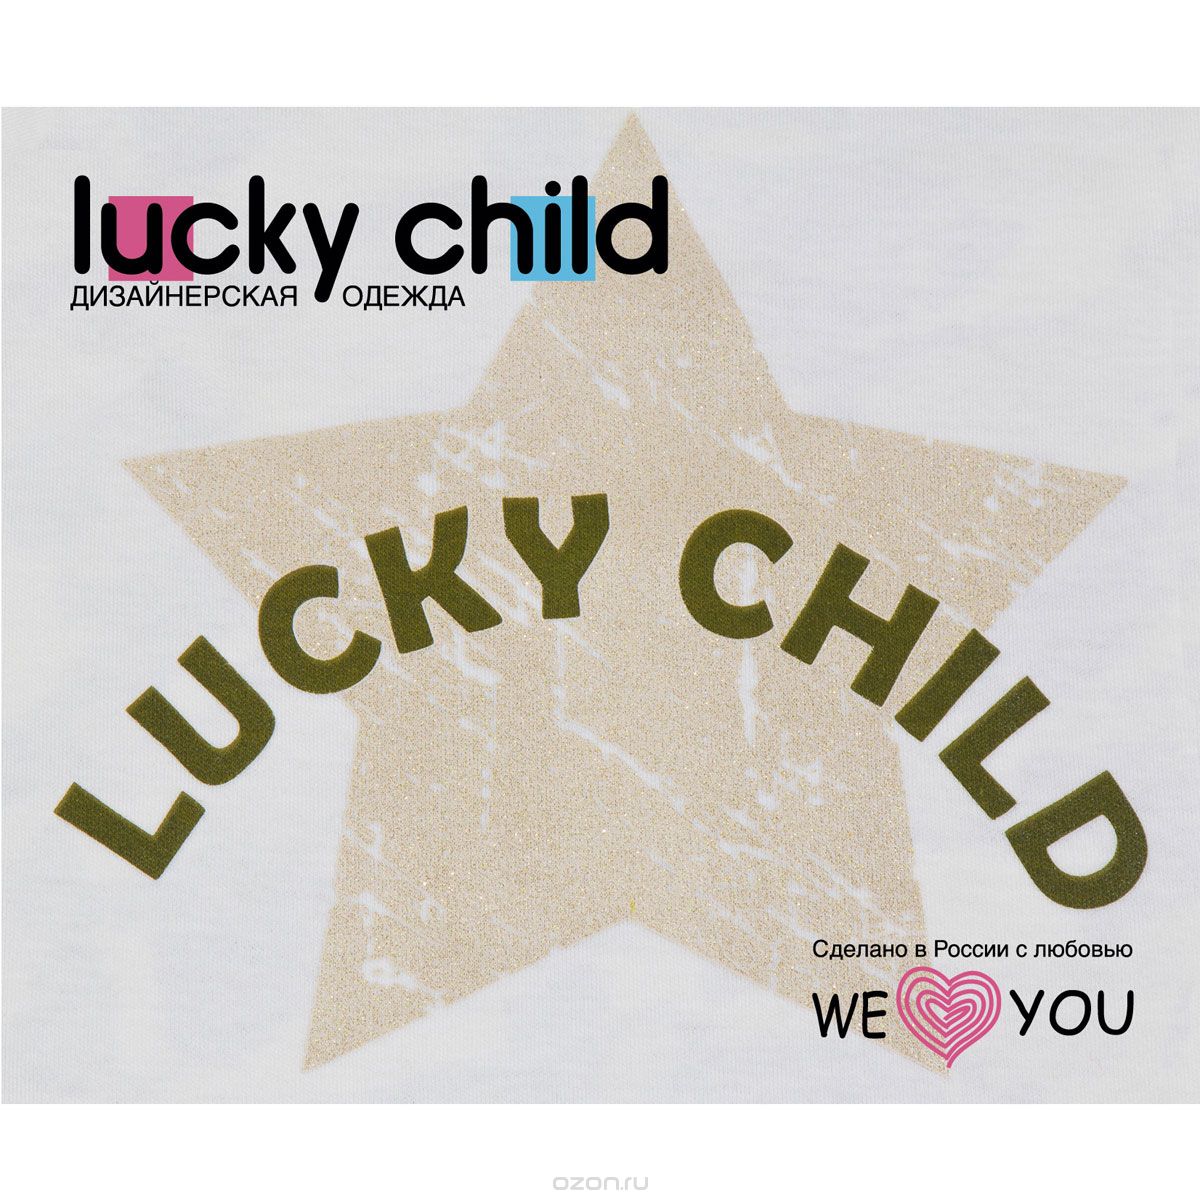    Lucky Child  , : -, -, . 31-63.  74/80